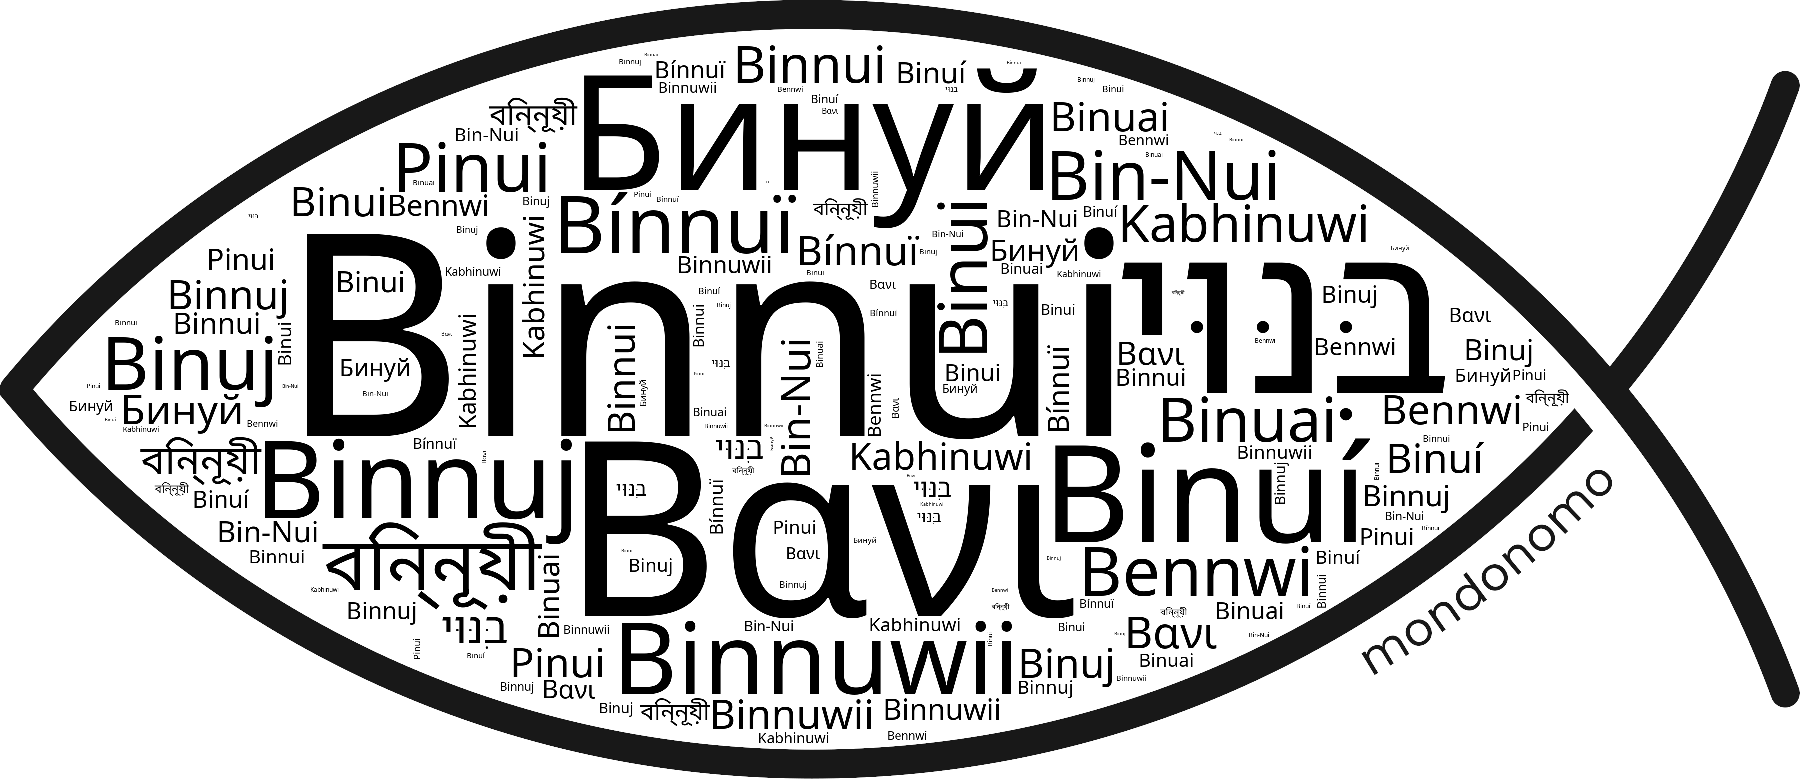 Name Binnui in the world's Bibles